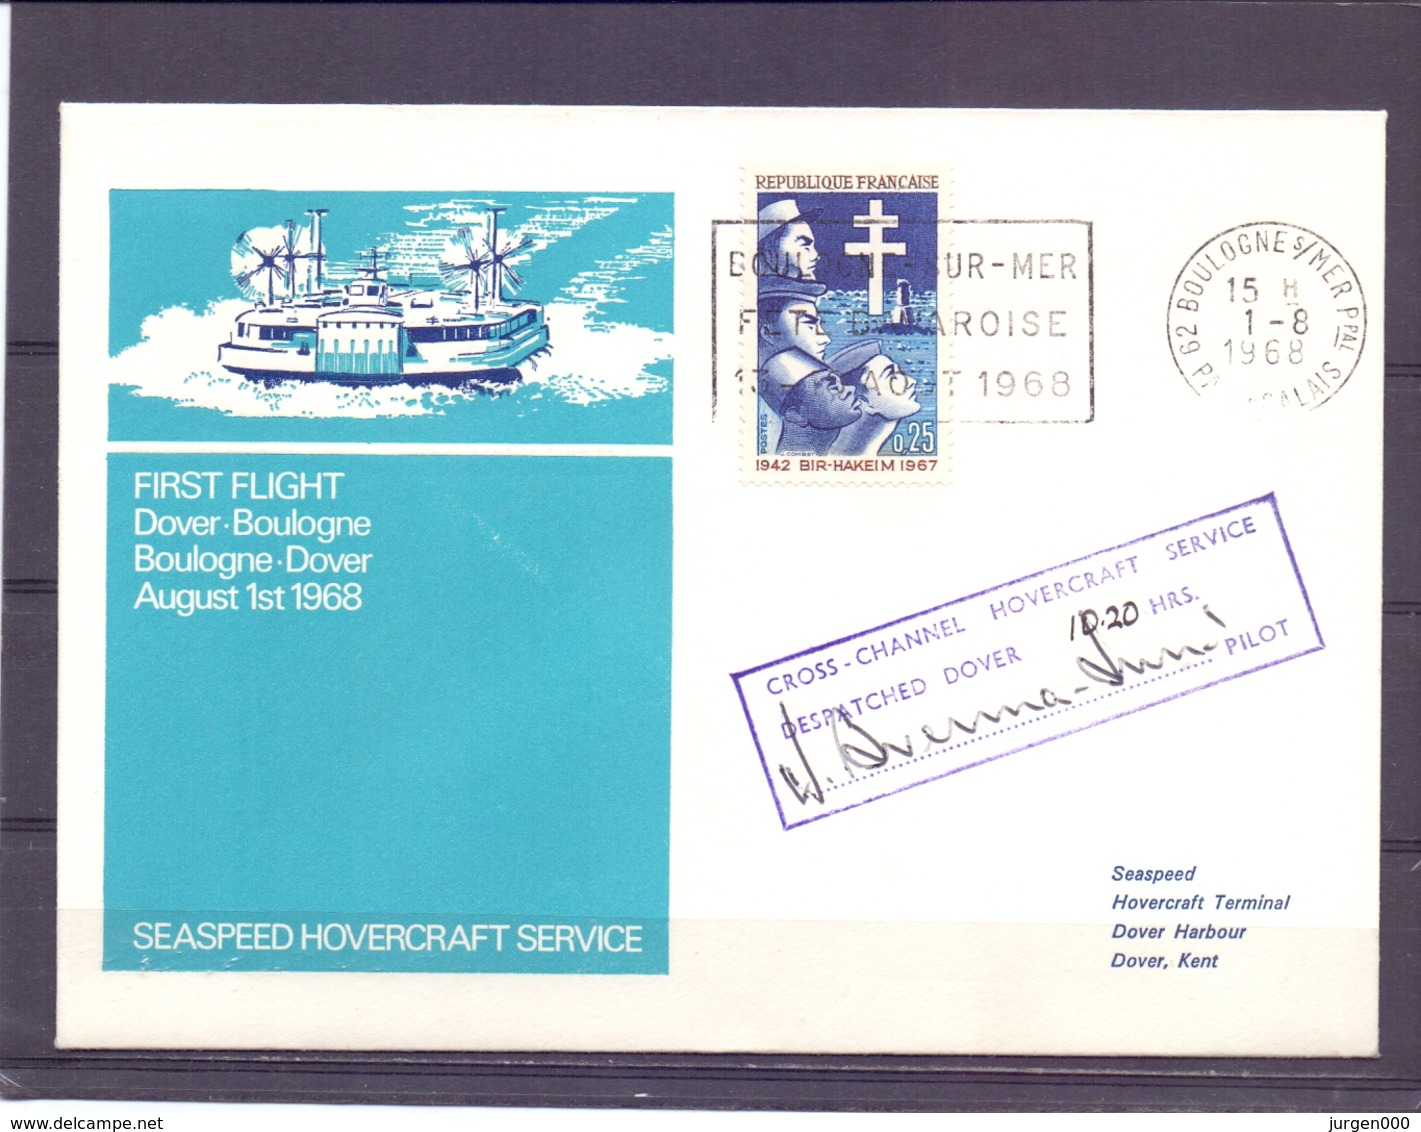 Rép. Française - Seaspeed Hovercraft Service - First Flight Dover - Boulogne  - 1/8/68   (RM13928) - Other (Sea)